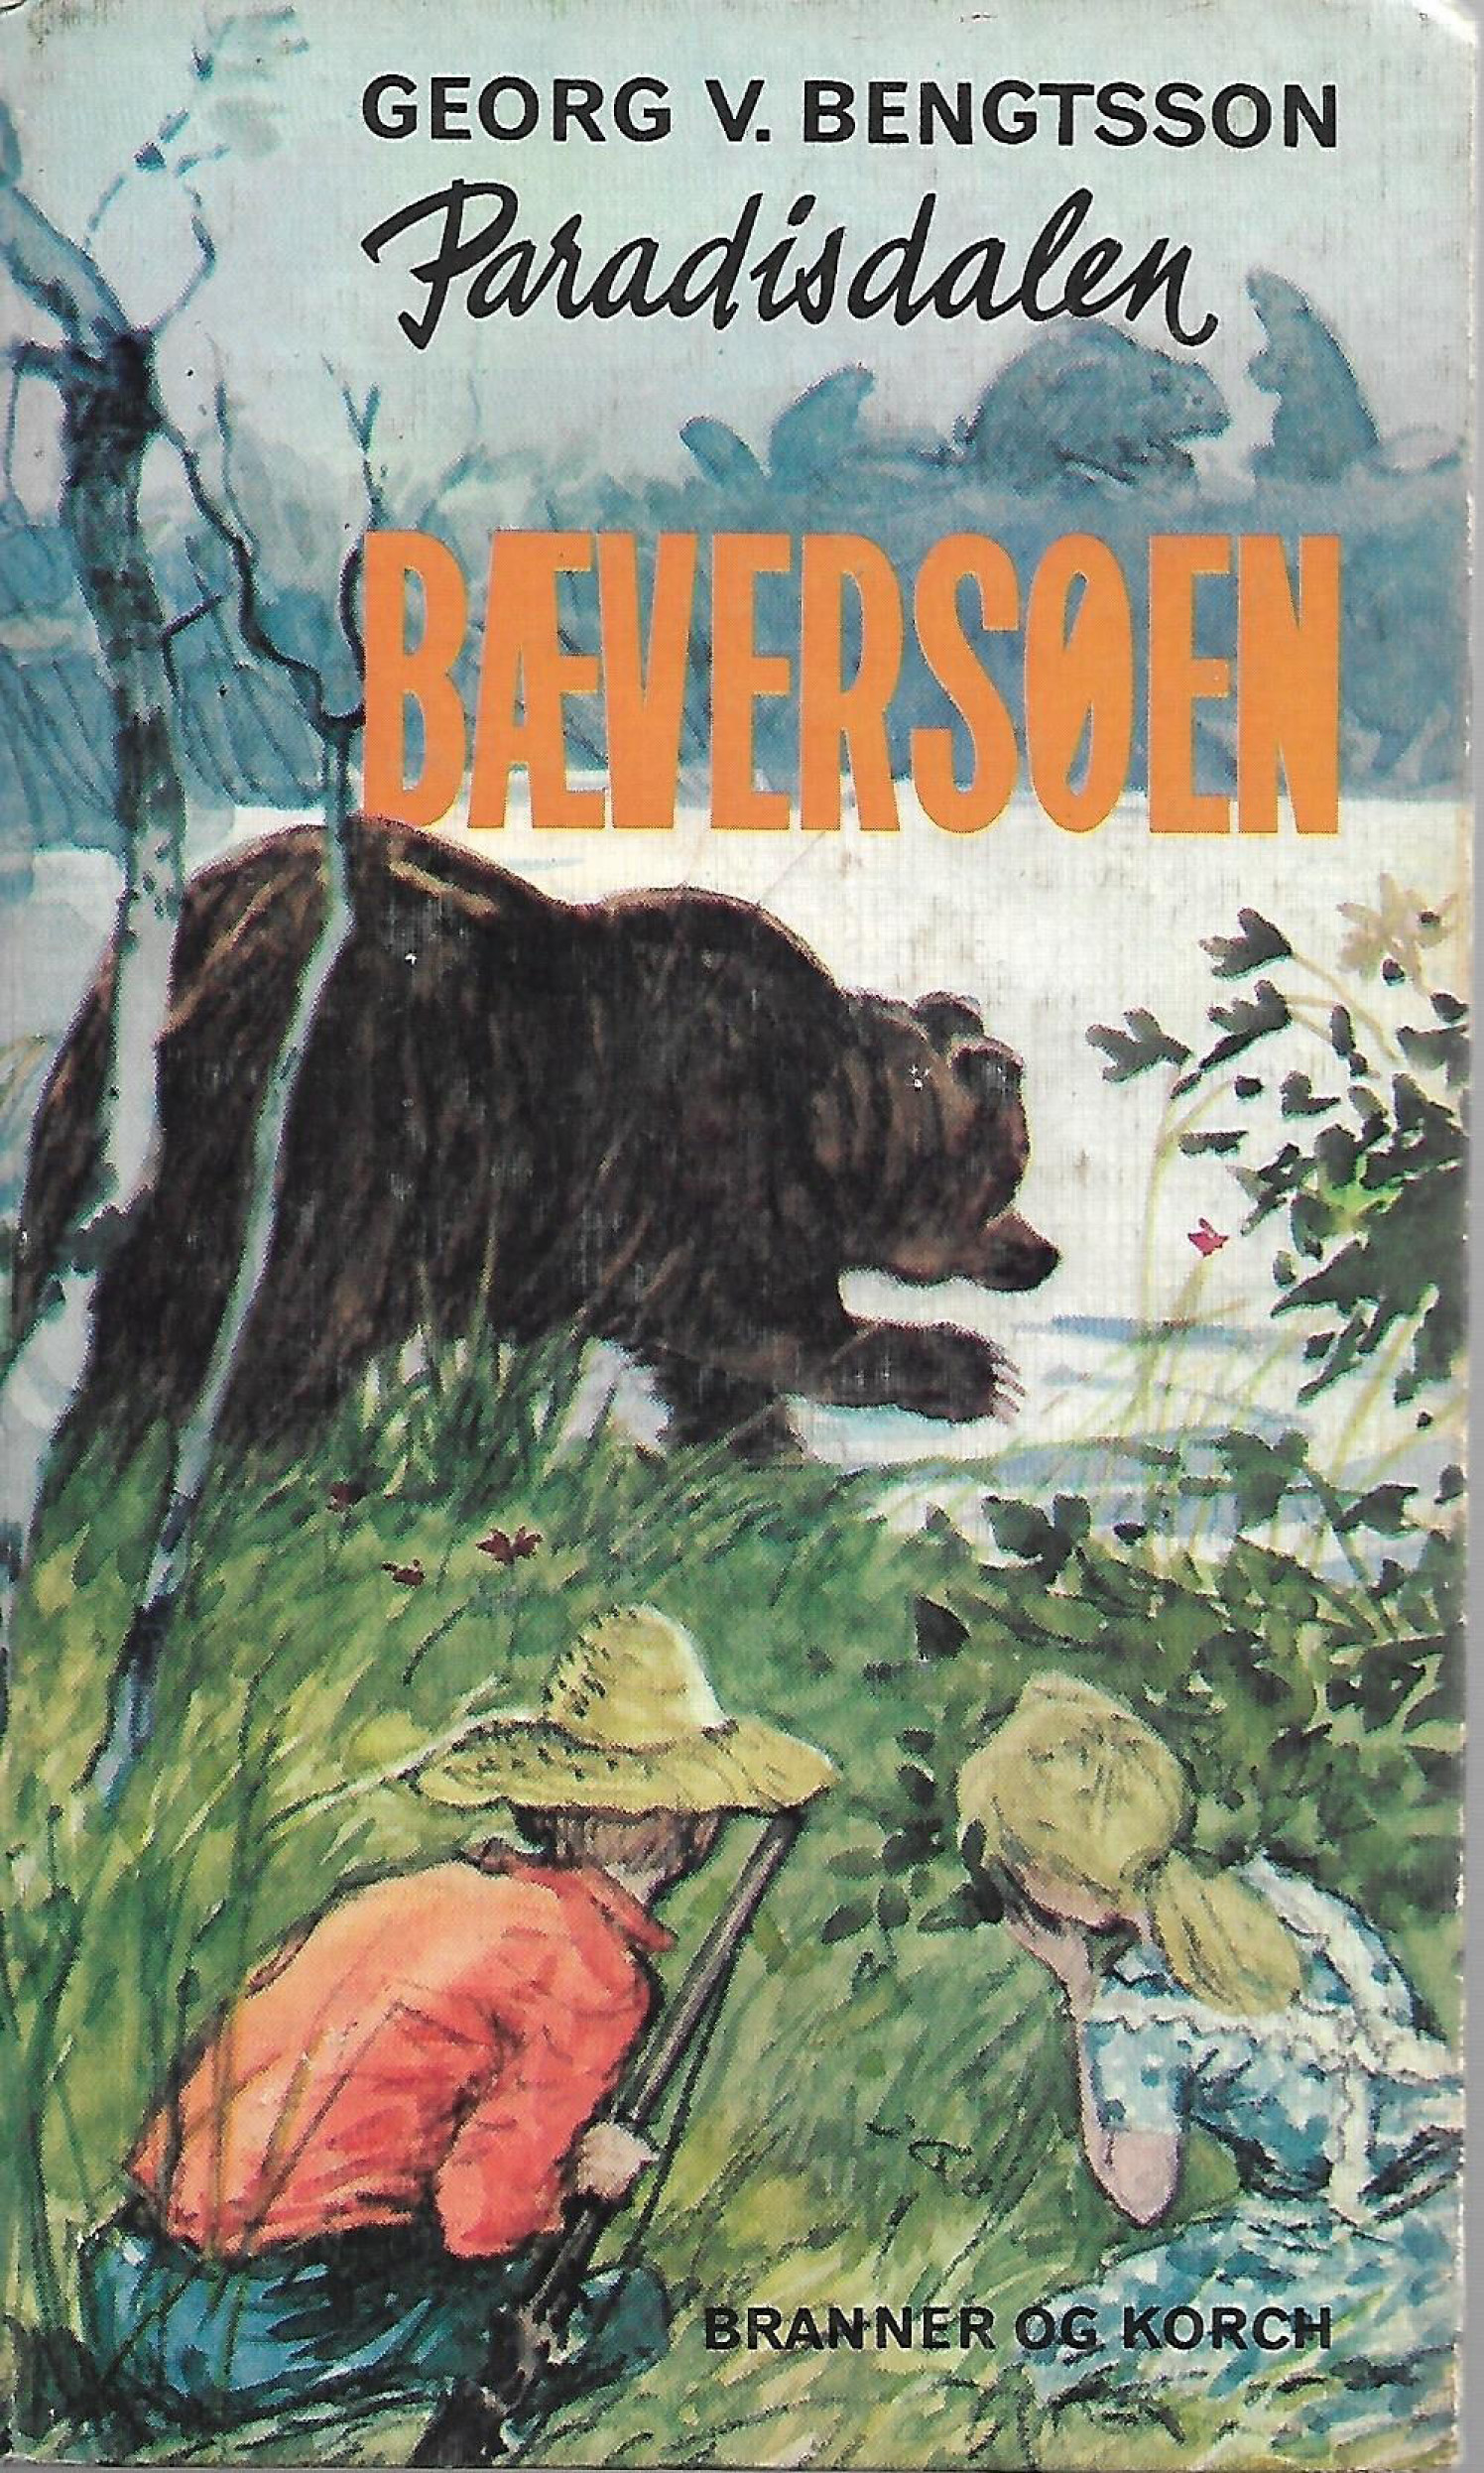 Paradisdalen - Bæversøen - Georg V Bengtsson-1